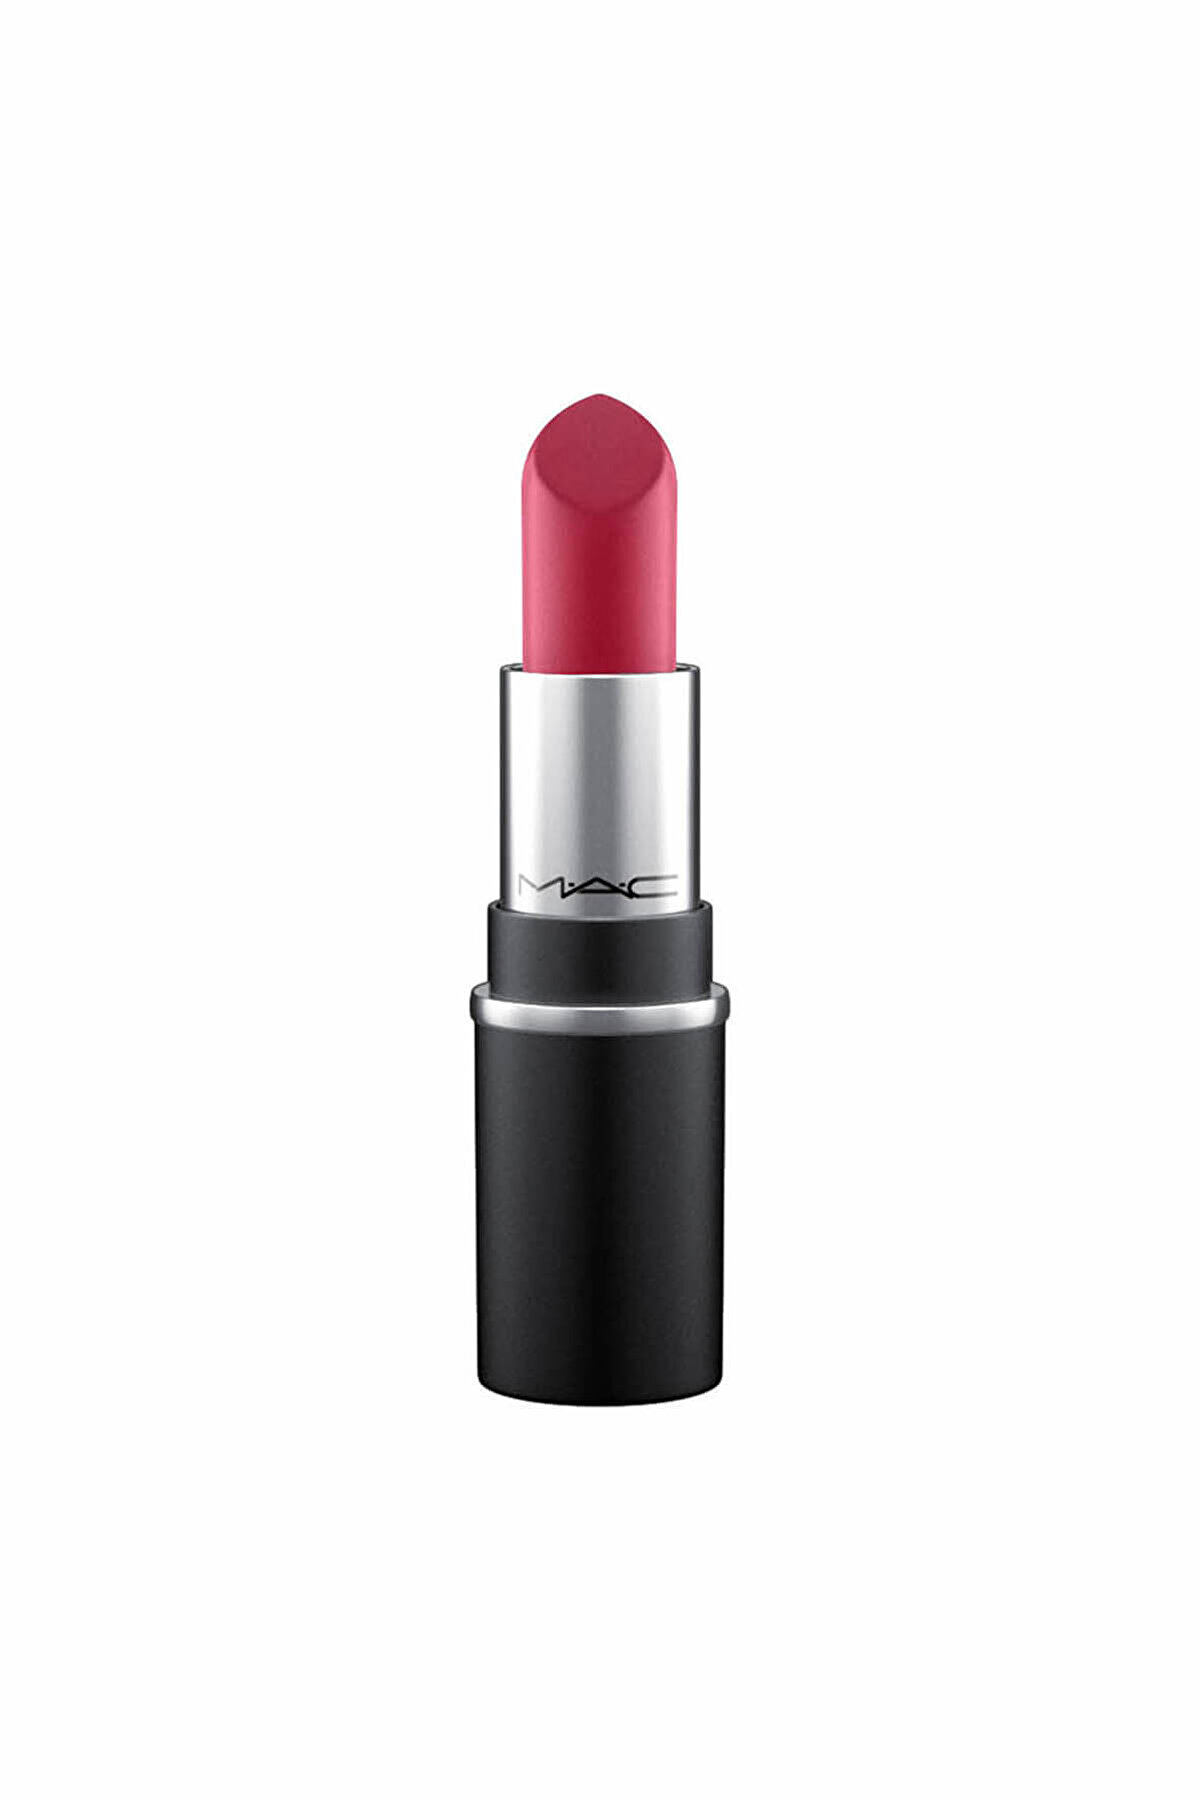 Mac Ruj - Mini Traditional Lipstick D for Danger 1.8 g 773602473045